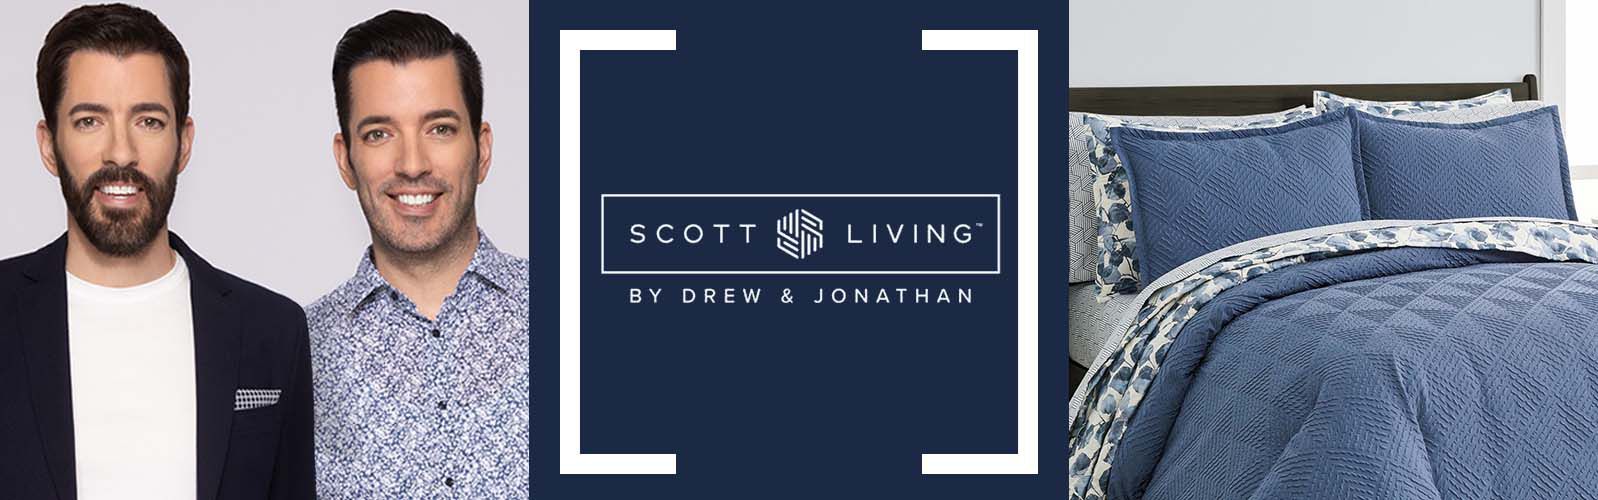 Scott Living by Drew & Jonathan 